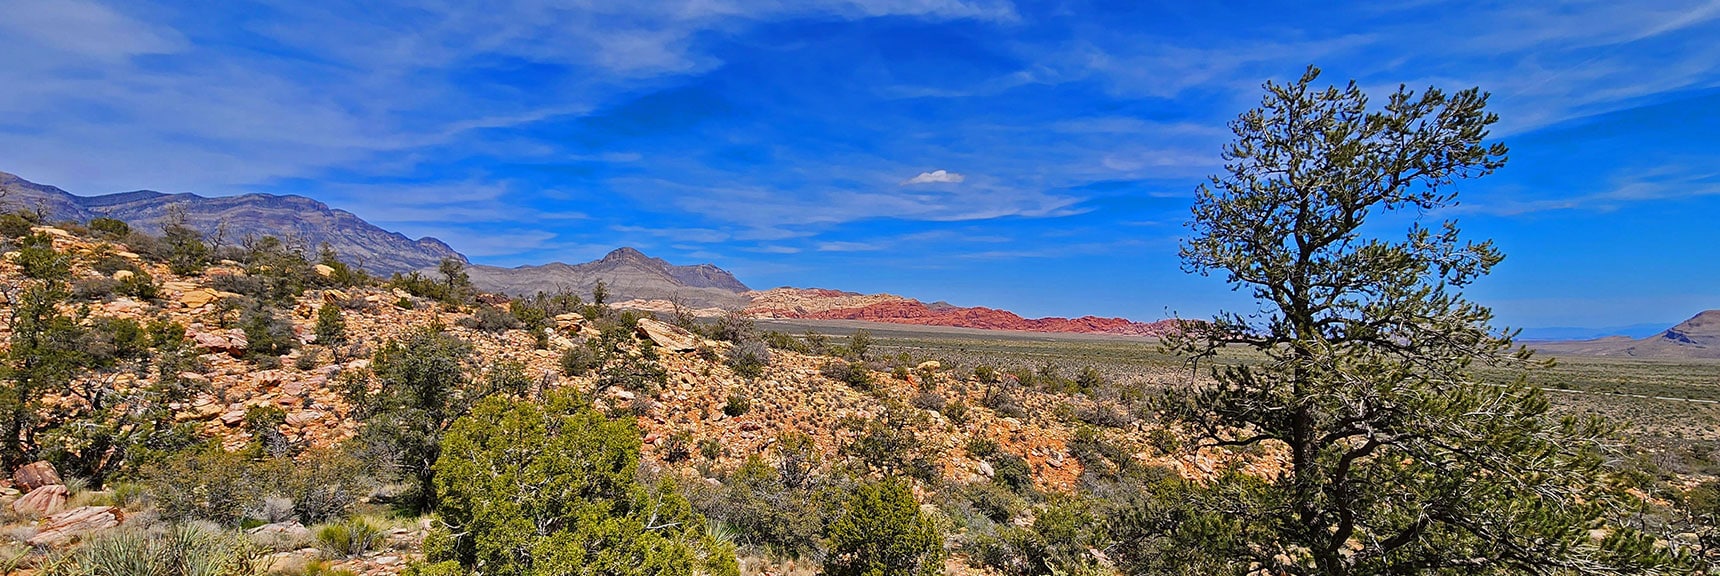 View Northeast Toward La Madre Cliffs, Turtlehead Peak and Calico Hills | Dales Trail | Red Rock Canyon National Conservation Area, Nevada | David Smith | LasVegasAreaTrails.com